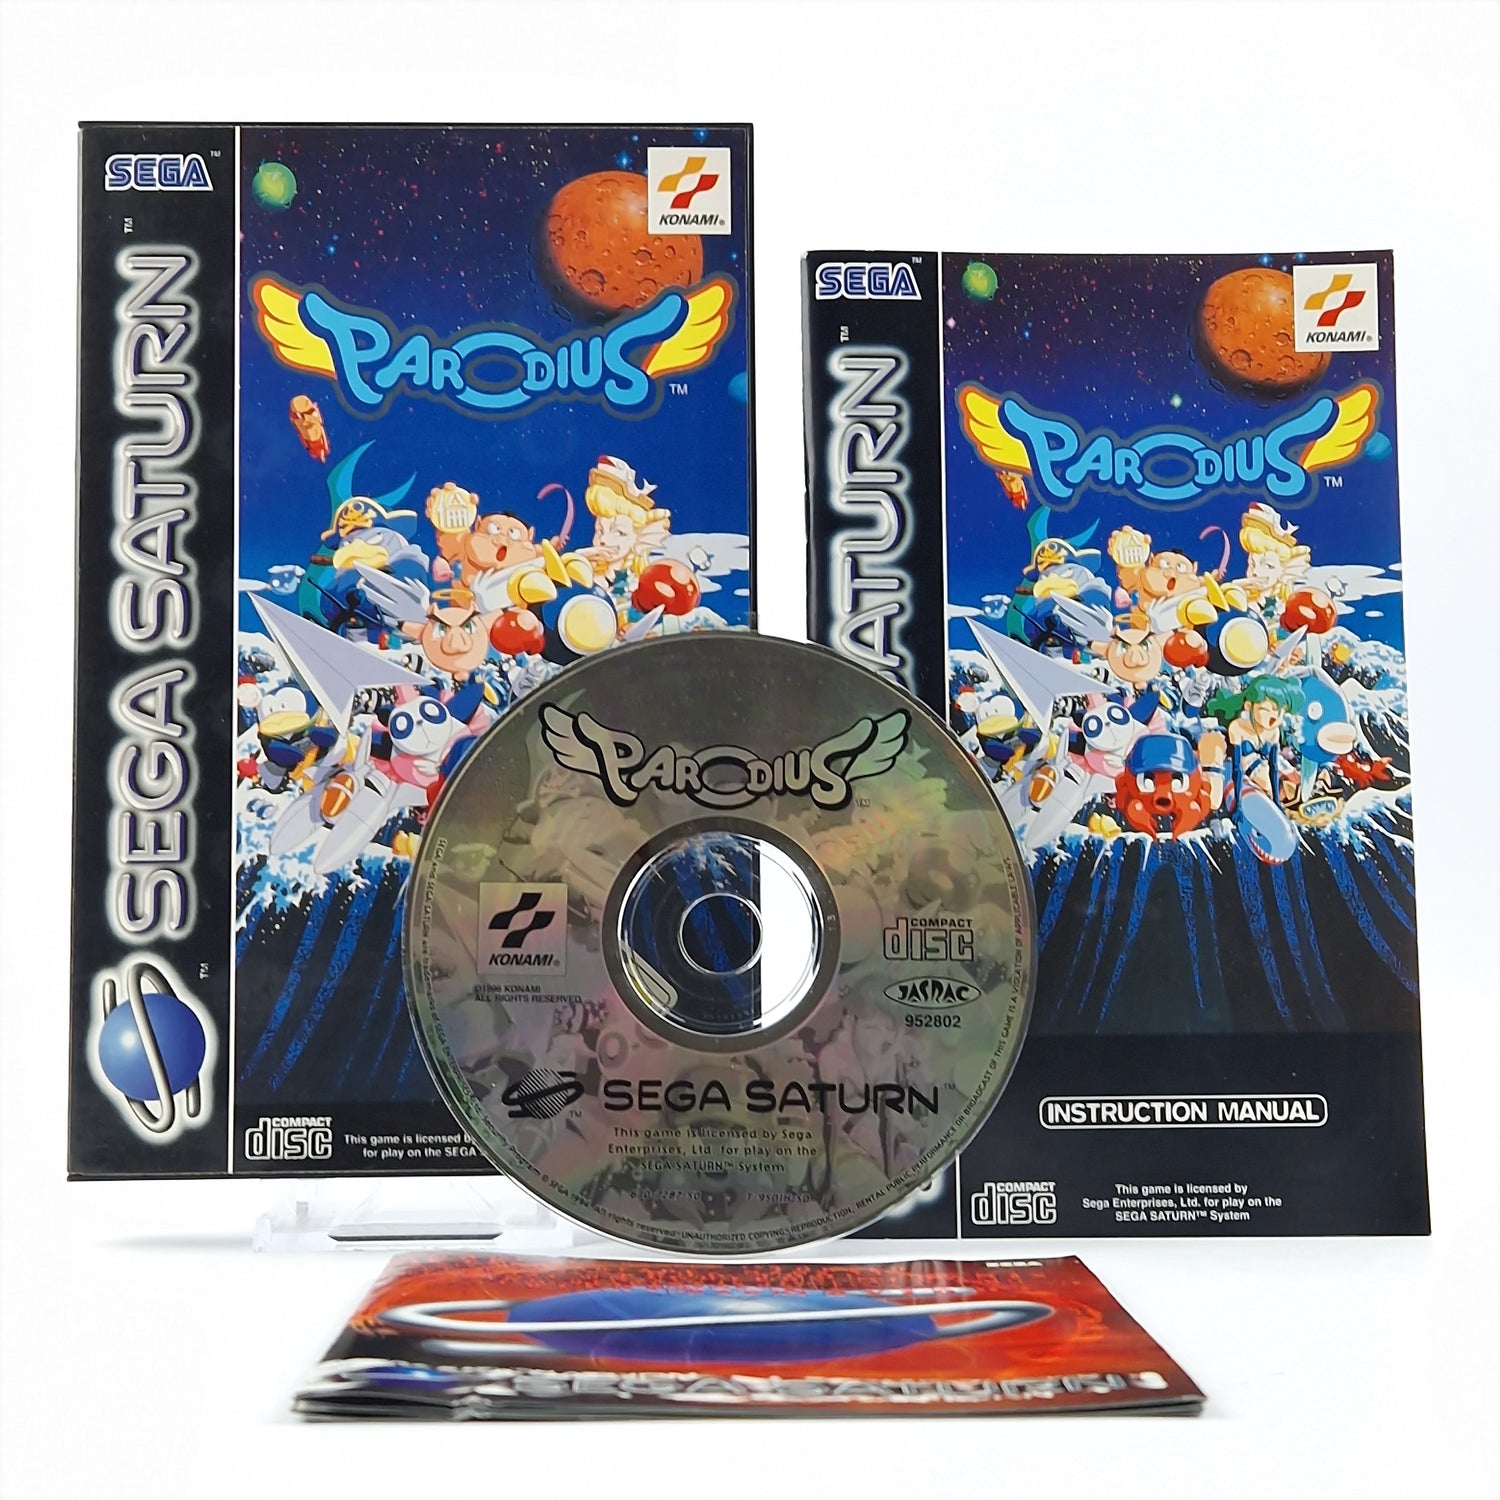 Sega Saturn Game: Parodius - CD Instructions OVP / PAL Disk Konami